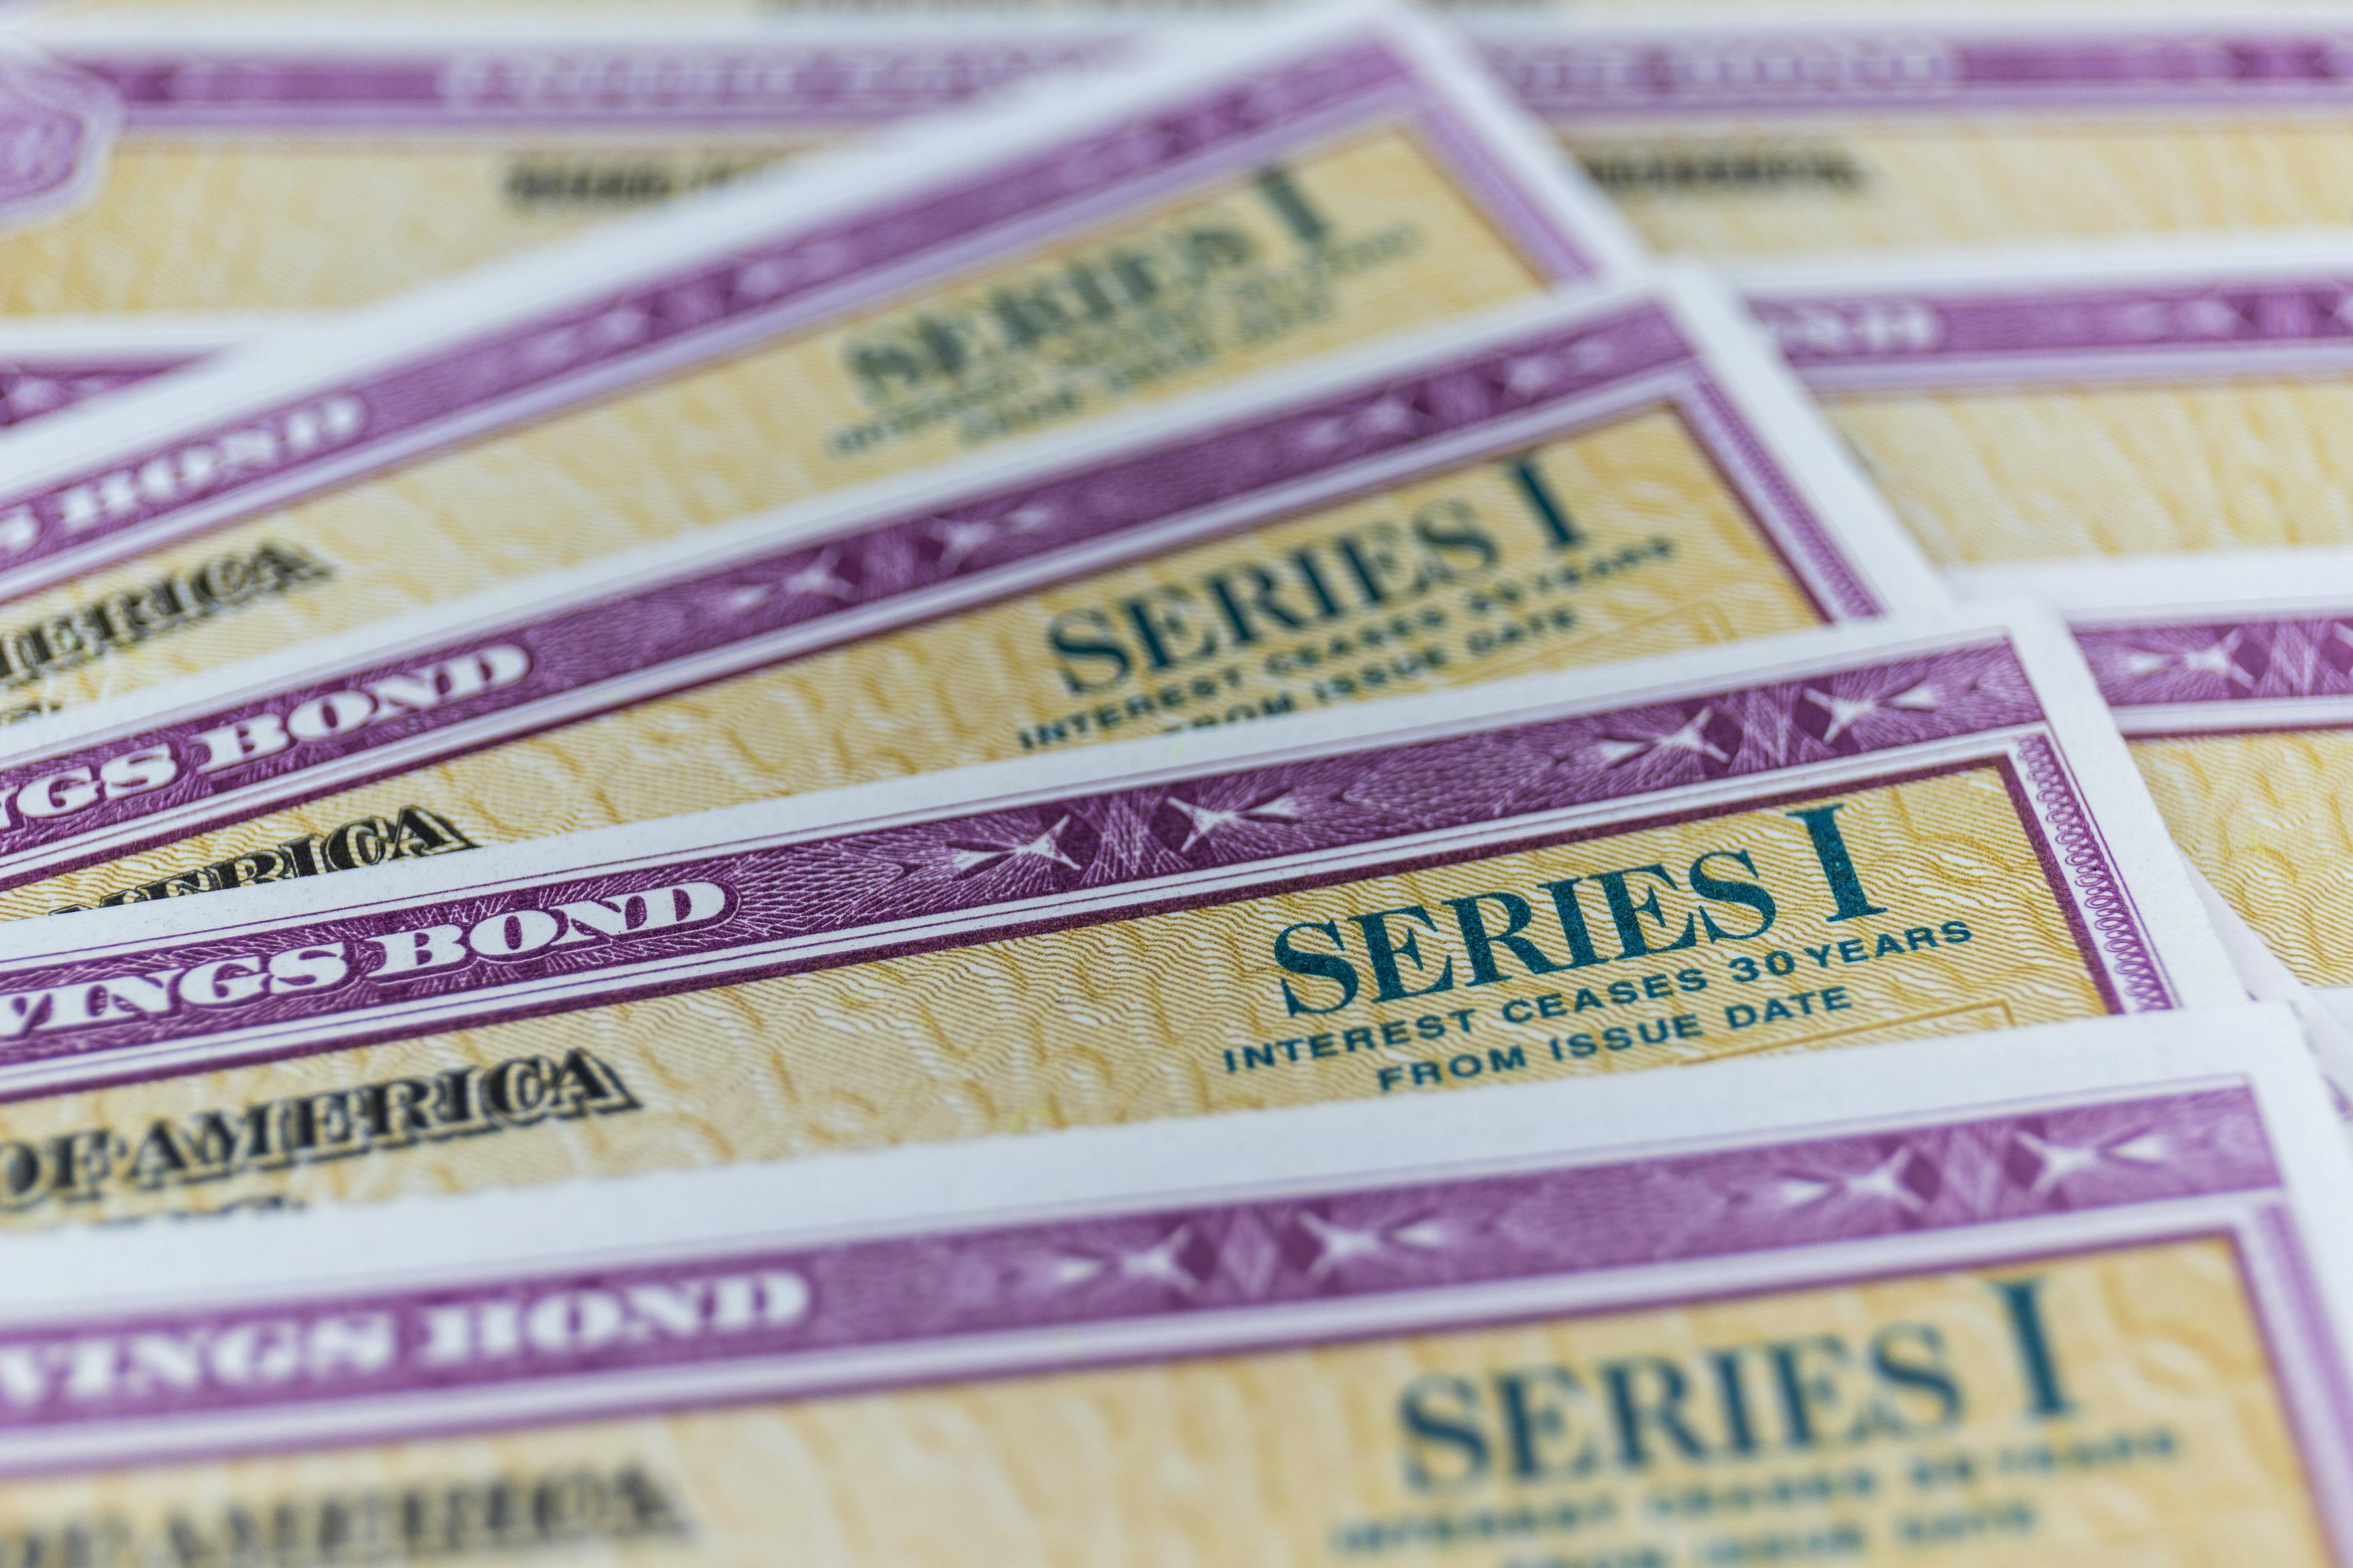 a close up on some Series I savings bonds